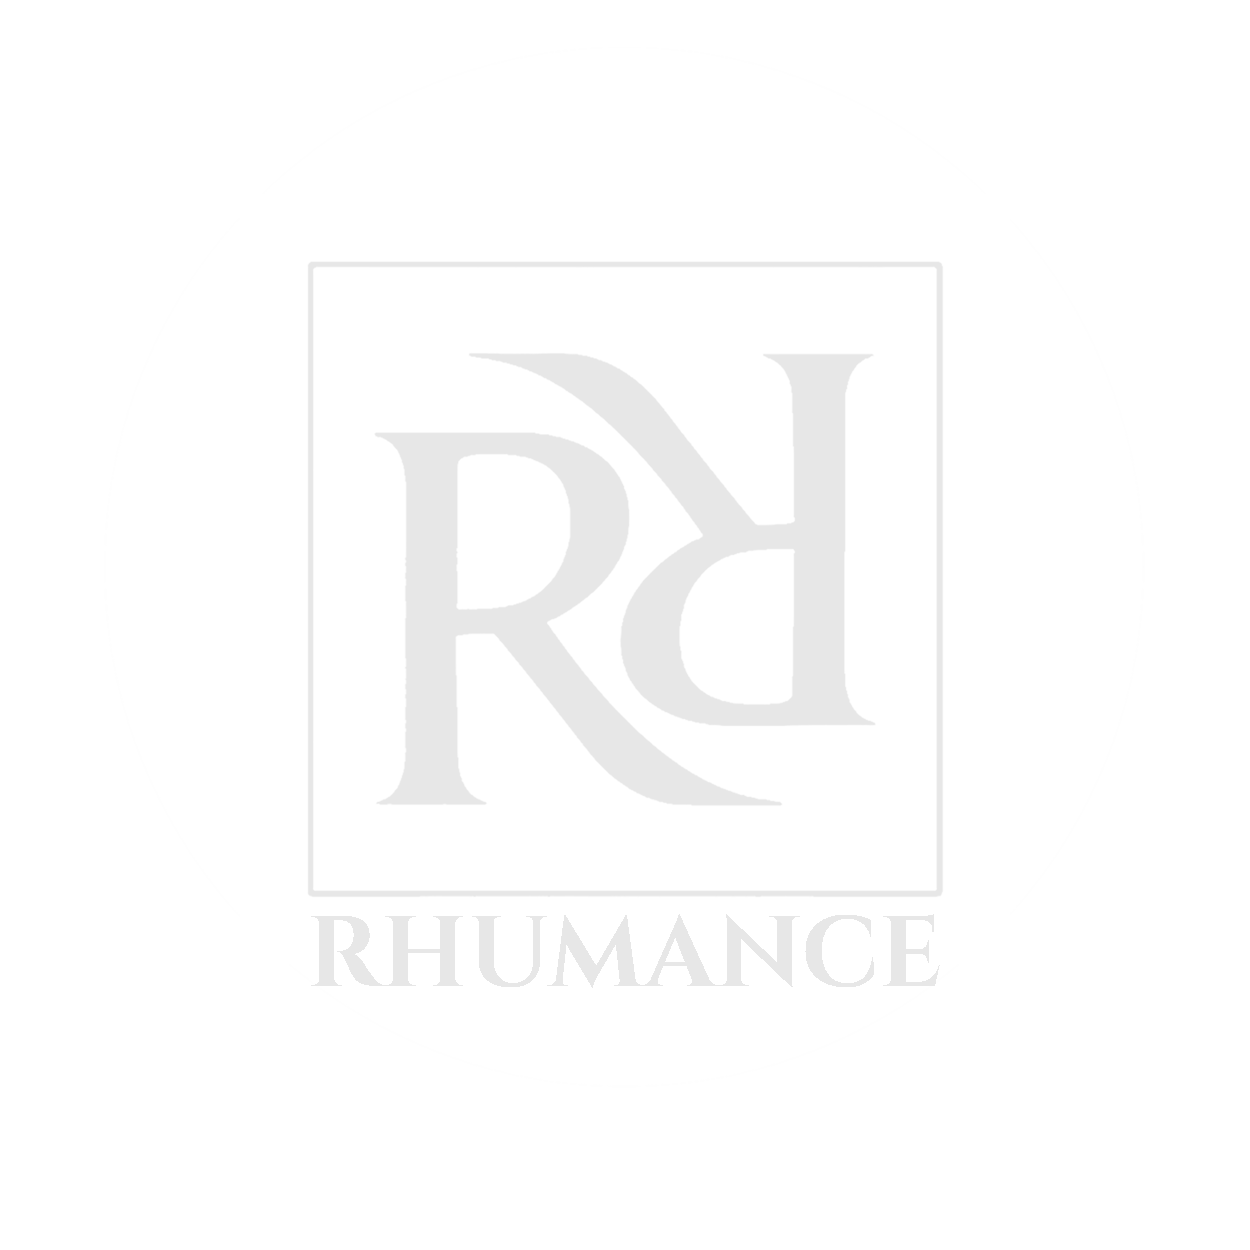 Rhumance